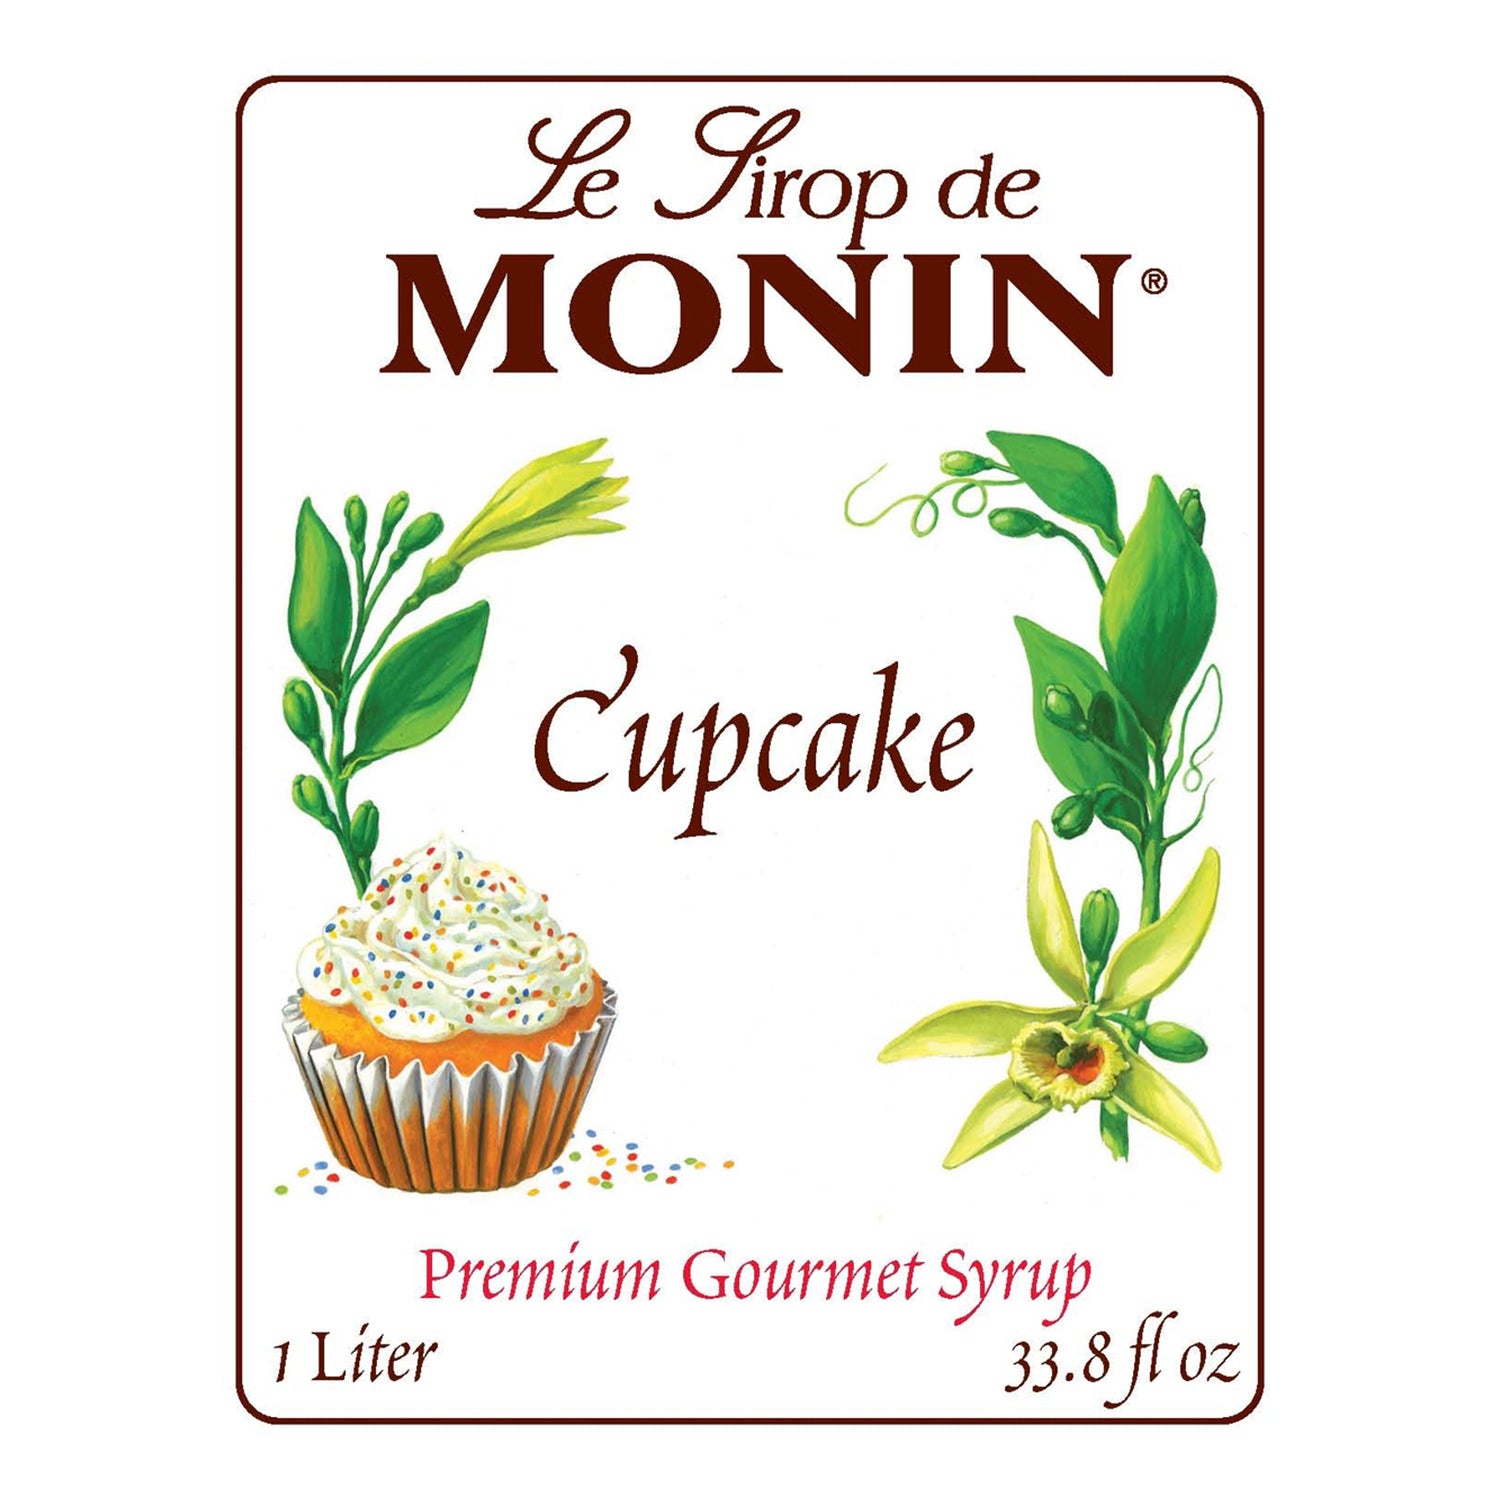 Monin Cupcake Syrup brand label